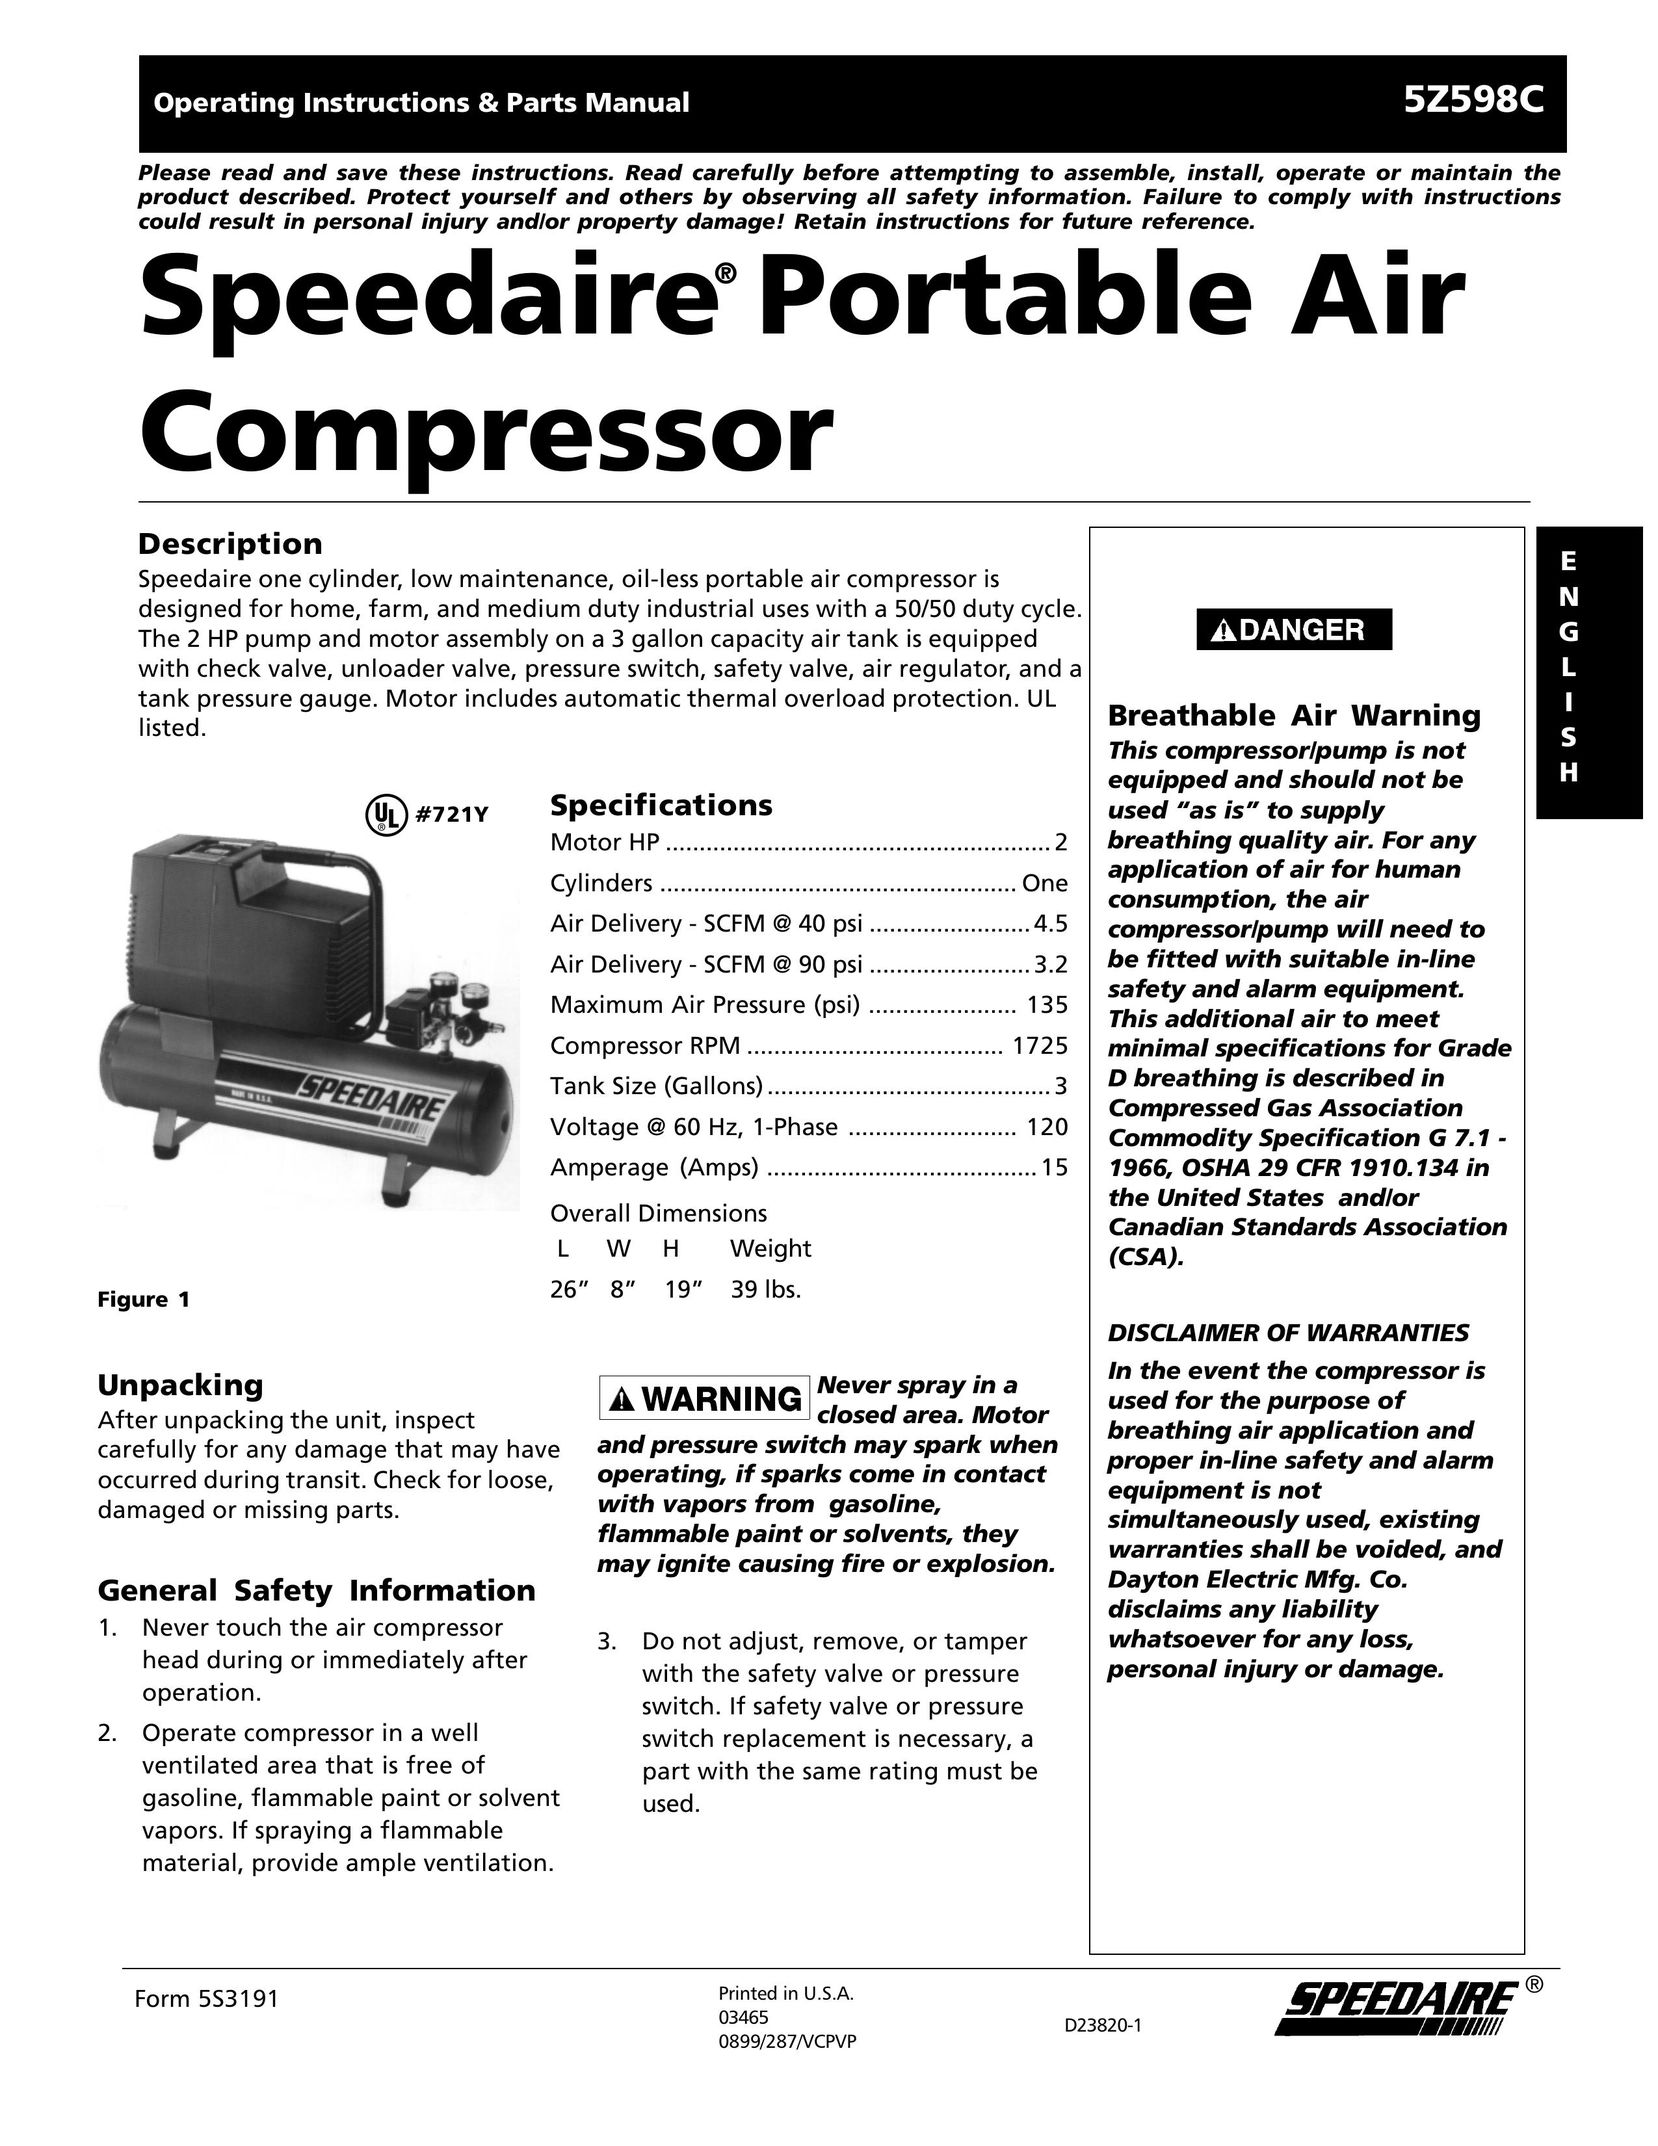 DeWalt 5Z598C Air Compressor User Manual